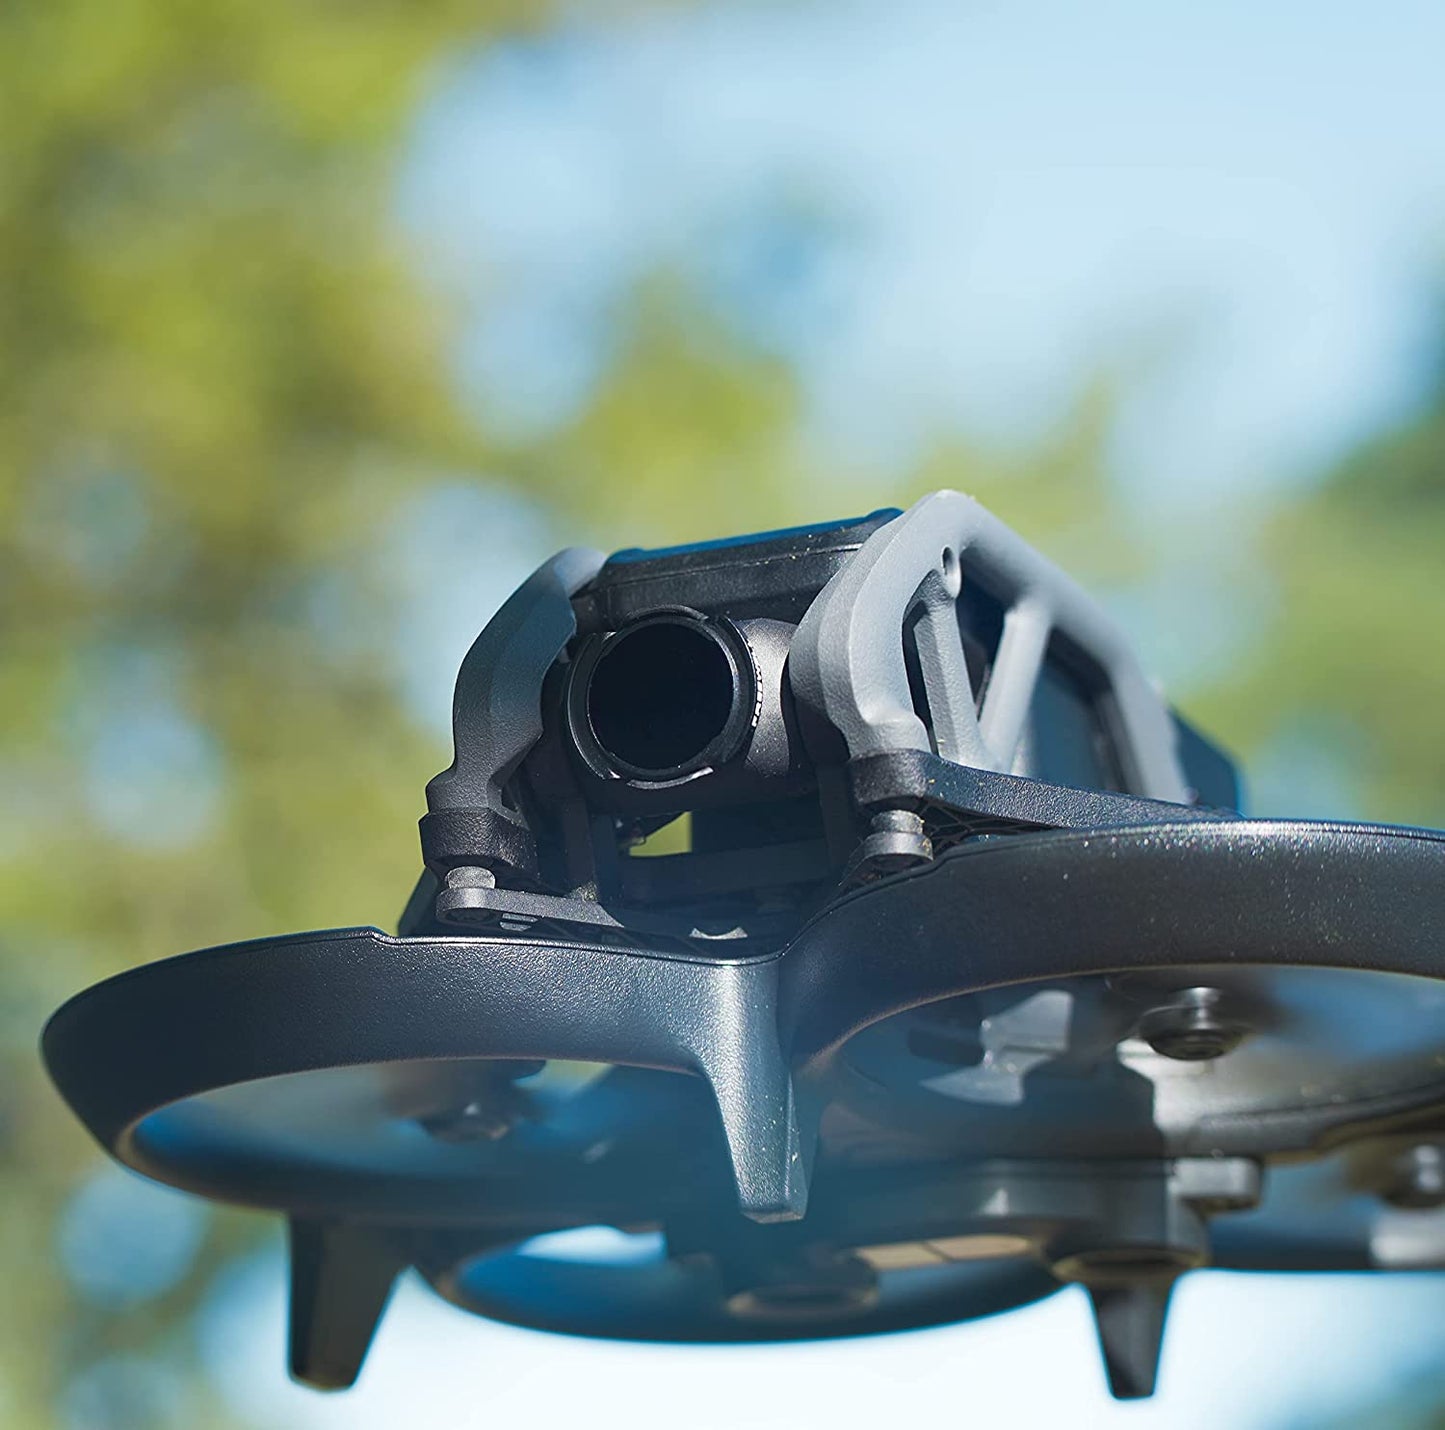 Freewell UV Camera Lens Filter for Avata Drone/O3 Air Unit